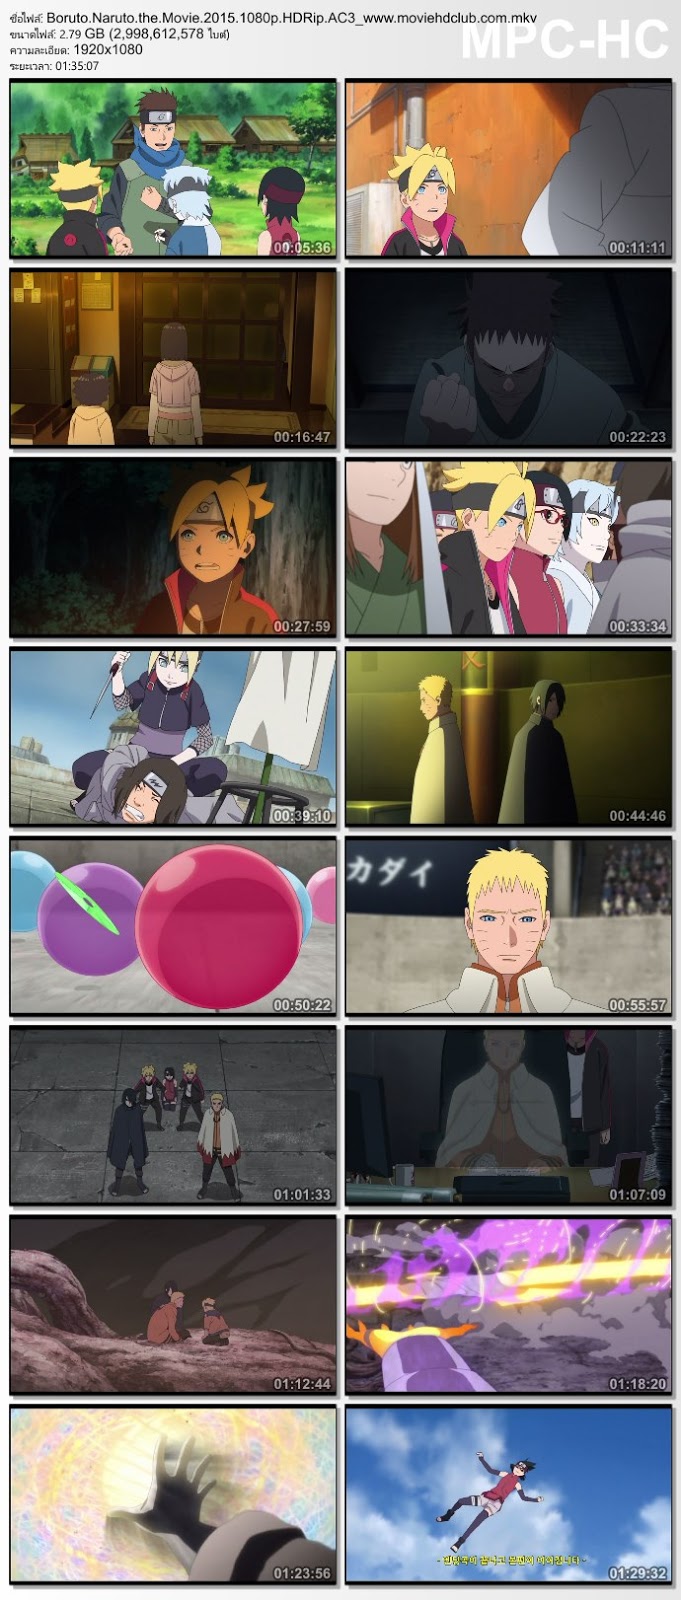 [Mini-HD] Boruto: Naruto the Movie (2015) - โบรูโตะ: นารูโตะ เดอะมูฟวี่ [1080p][เสียง:ไทยมาสเตอร์][ซับ:-][.MKV][2.79GB] BT_MovieHdClub_SS